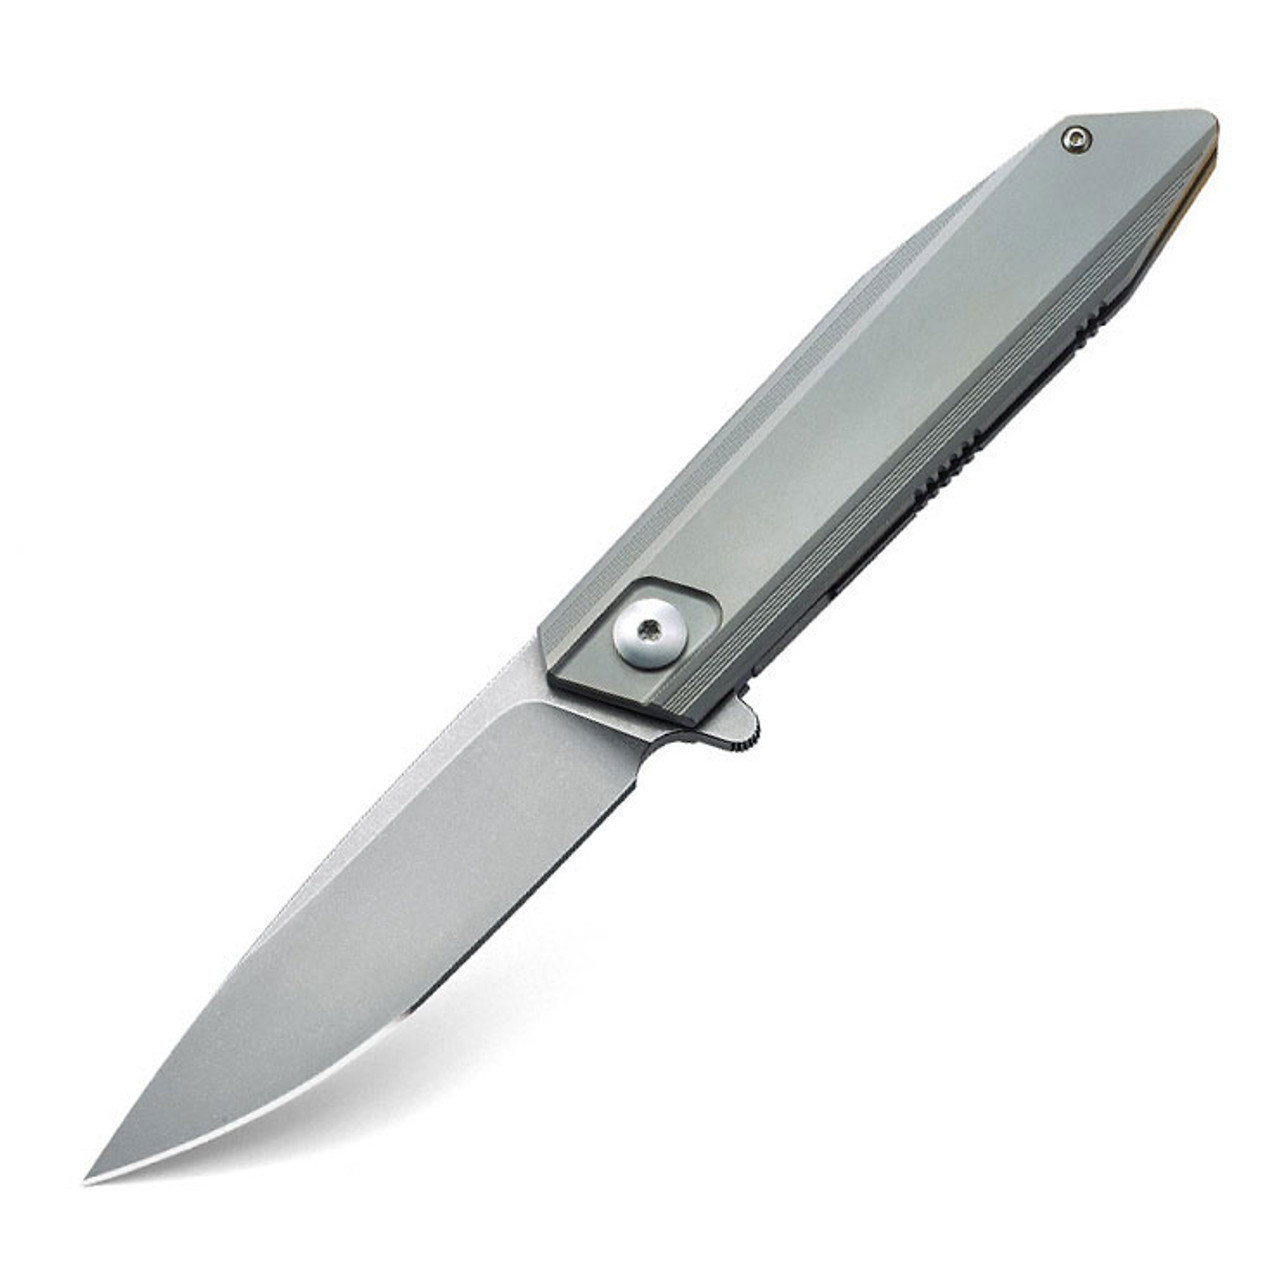 Bestech Shogun BT1701A, 3.54" CPM-S35VN Stonewash Plain Blade, Gray Titanium Handle